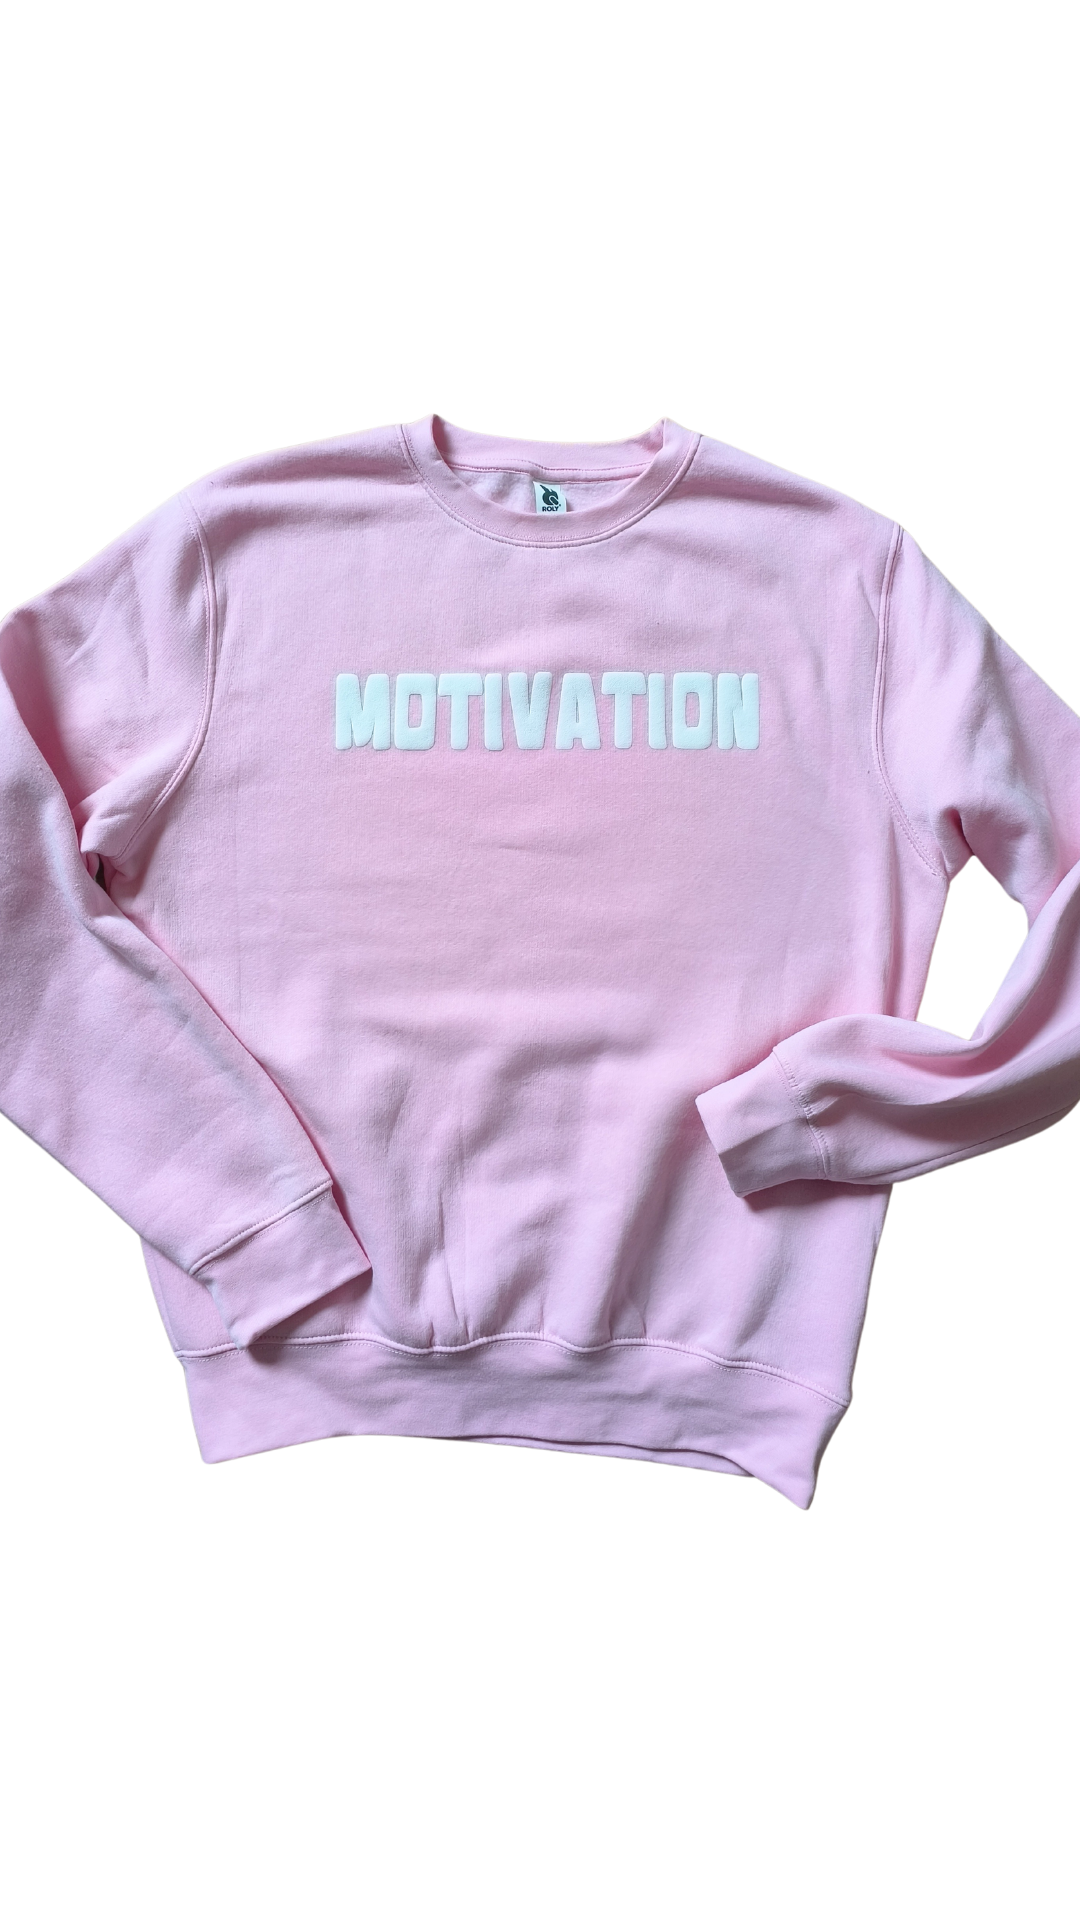 Motivation sweater pink S